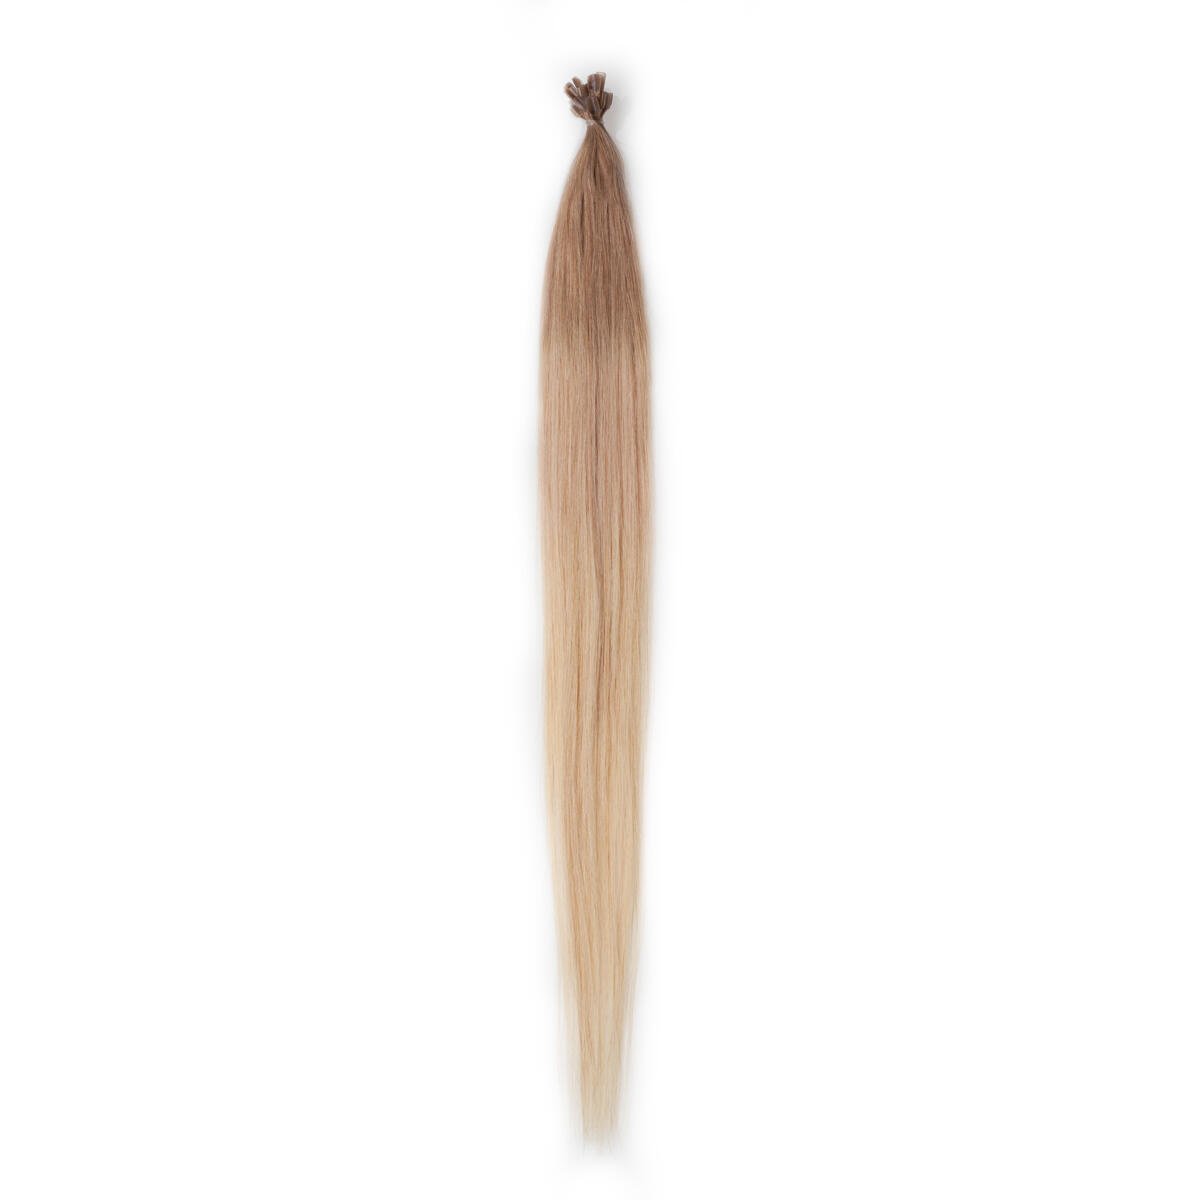 Nail Hair Premium O7.5/8.3 Golden Blond Ombre 40 cm